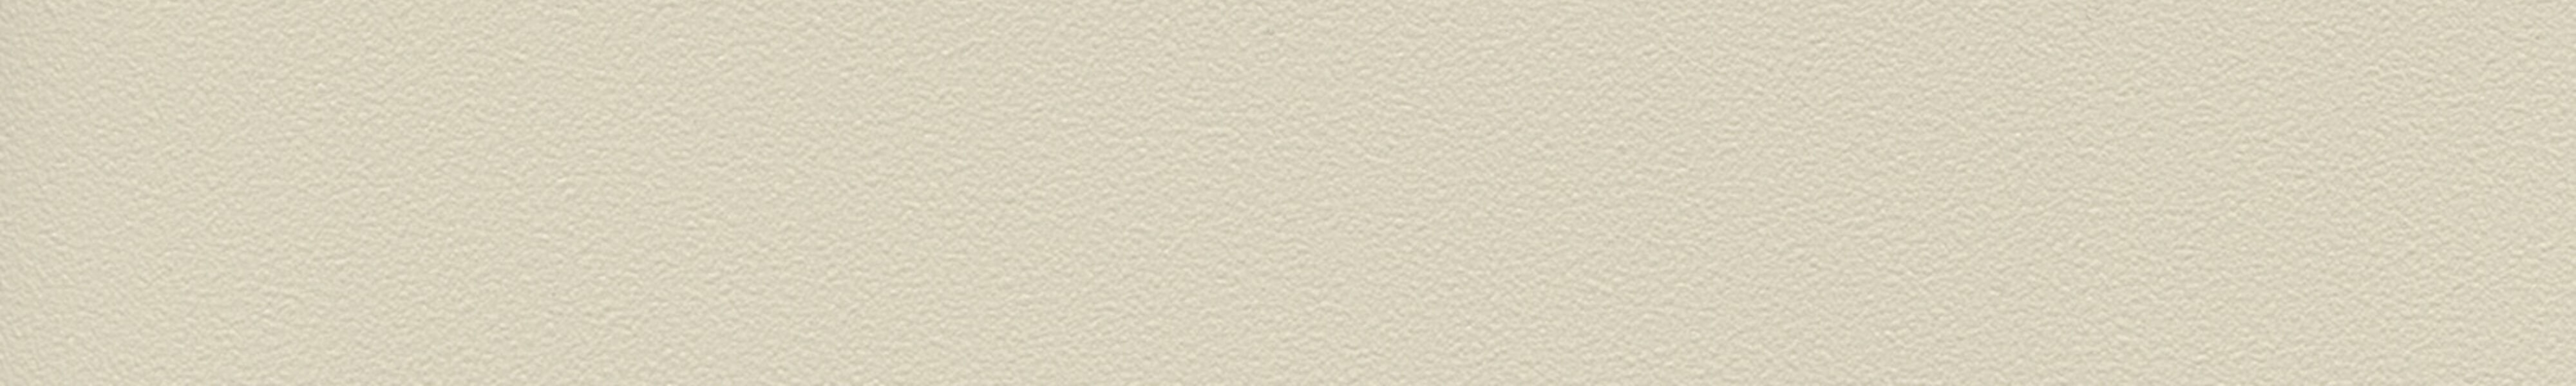 skai® colore classico beige              0,40 1420